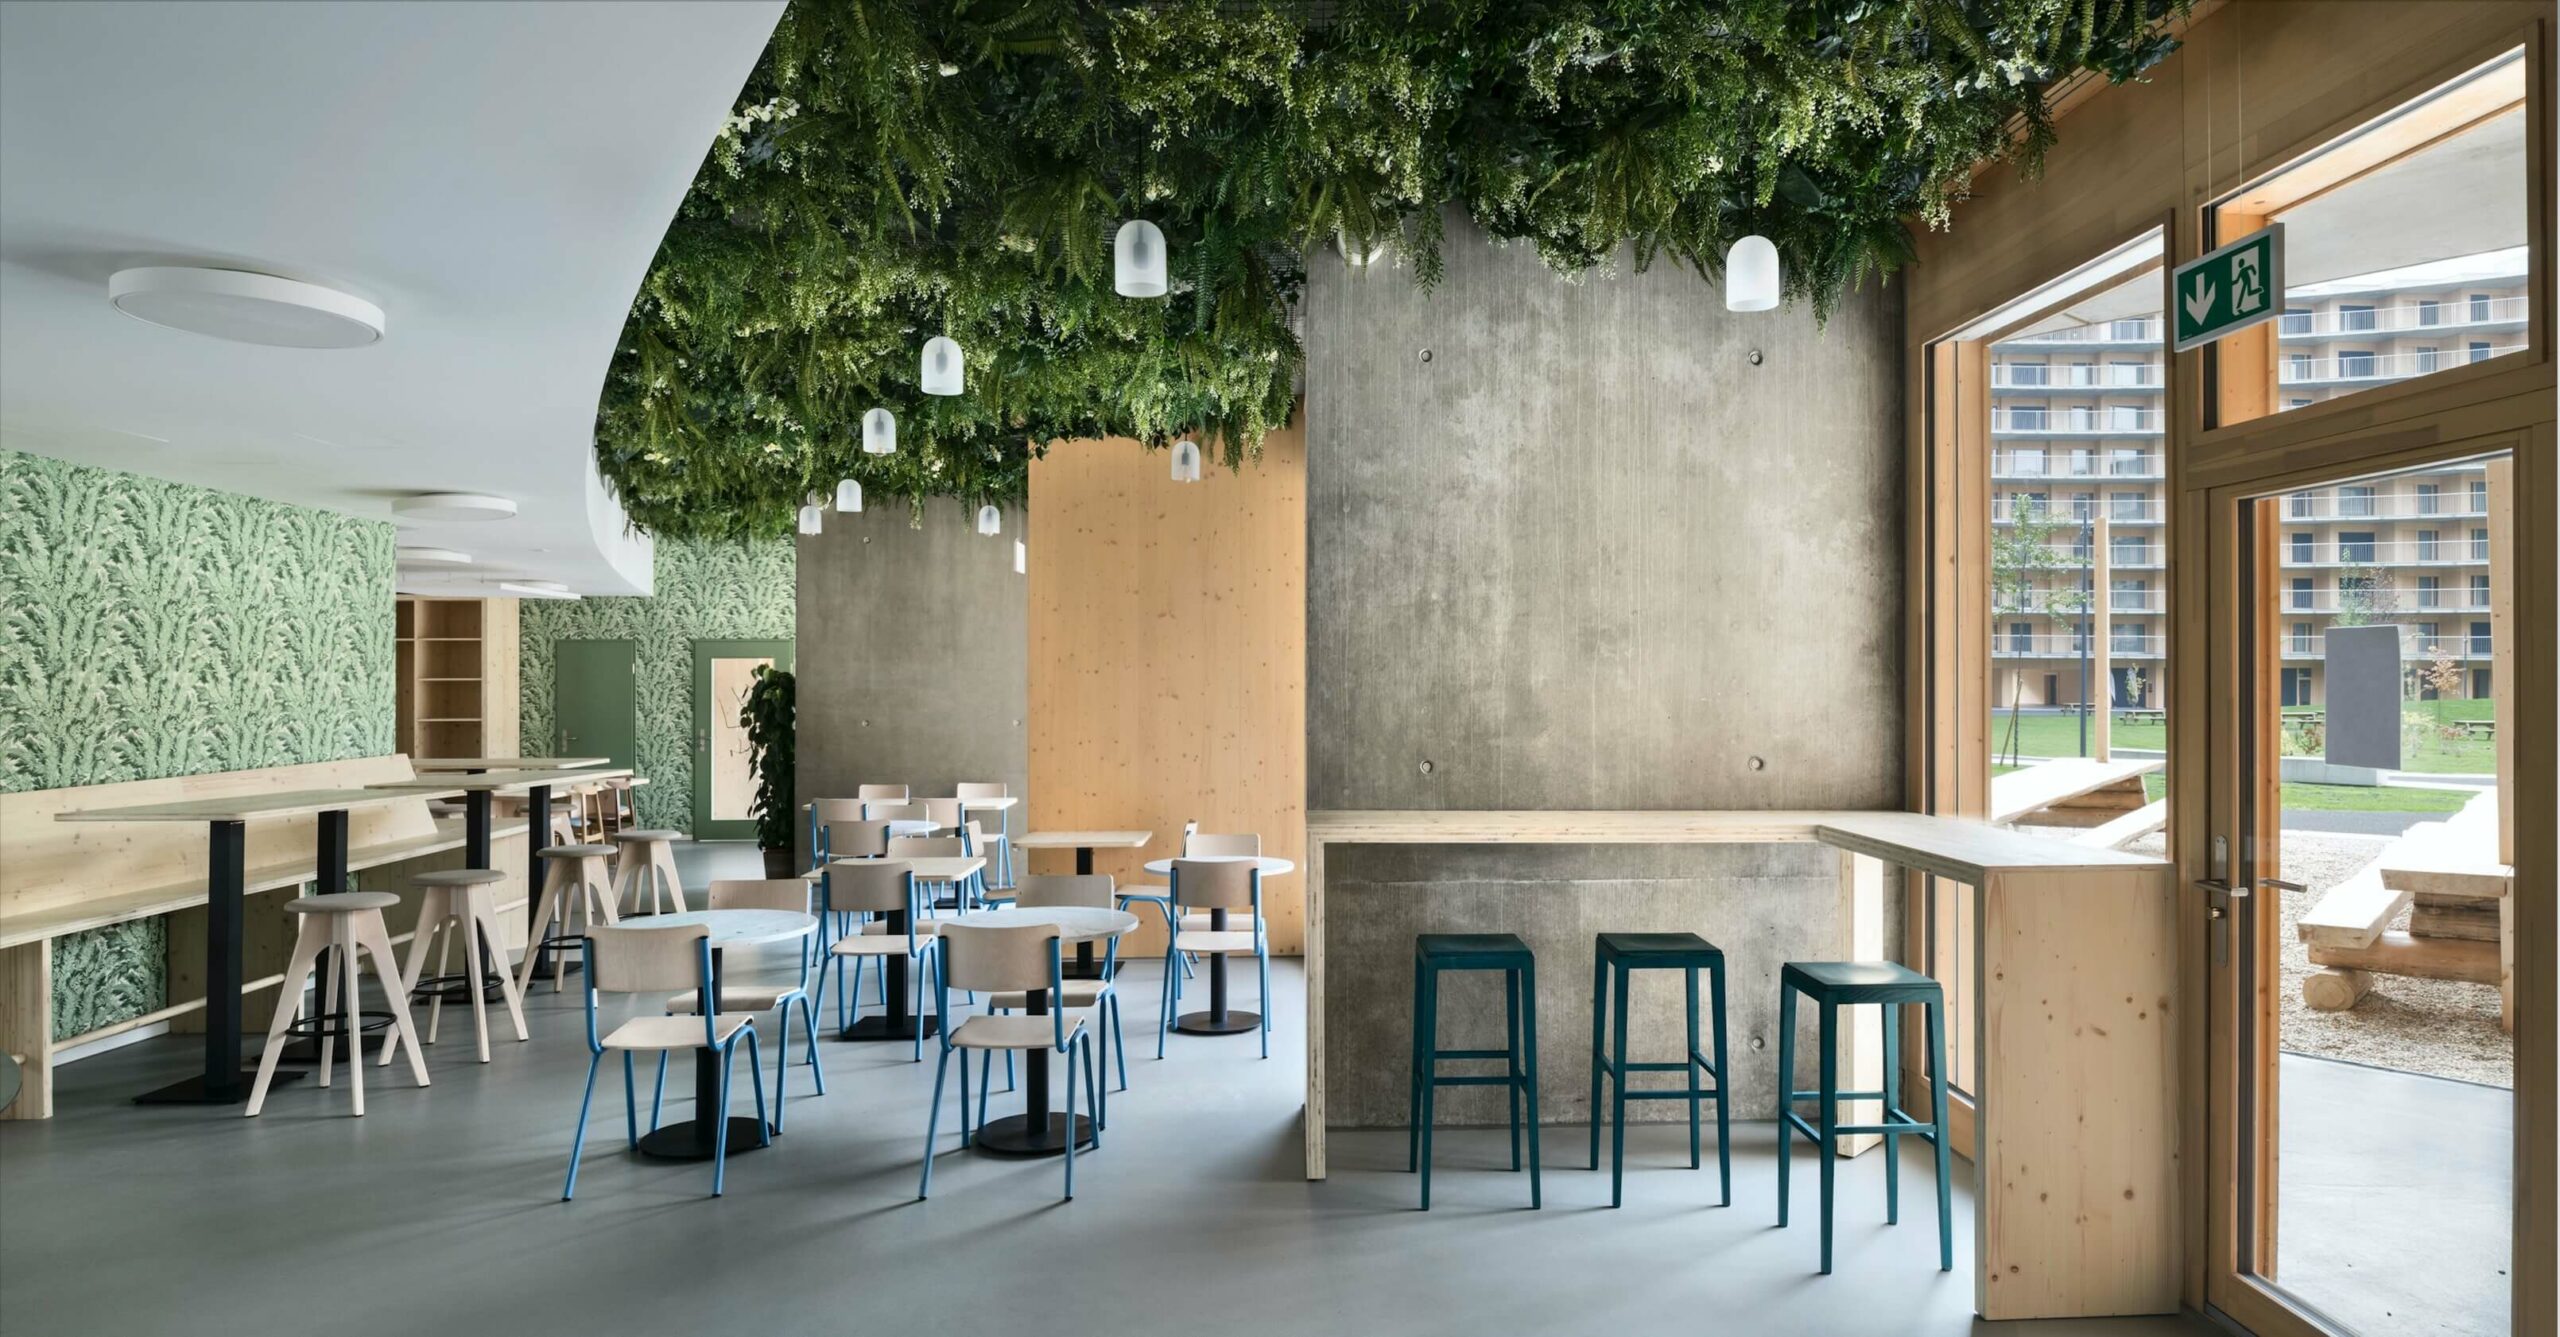 8 Inspiring Restaurant Design Ideas with Wooden Interior